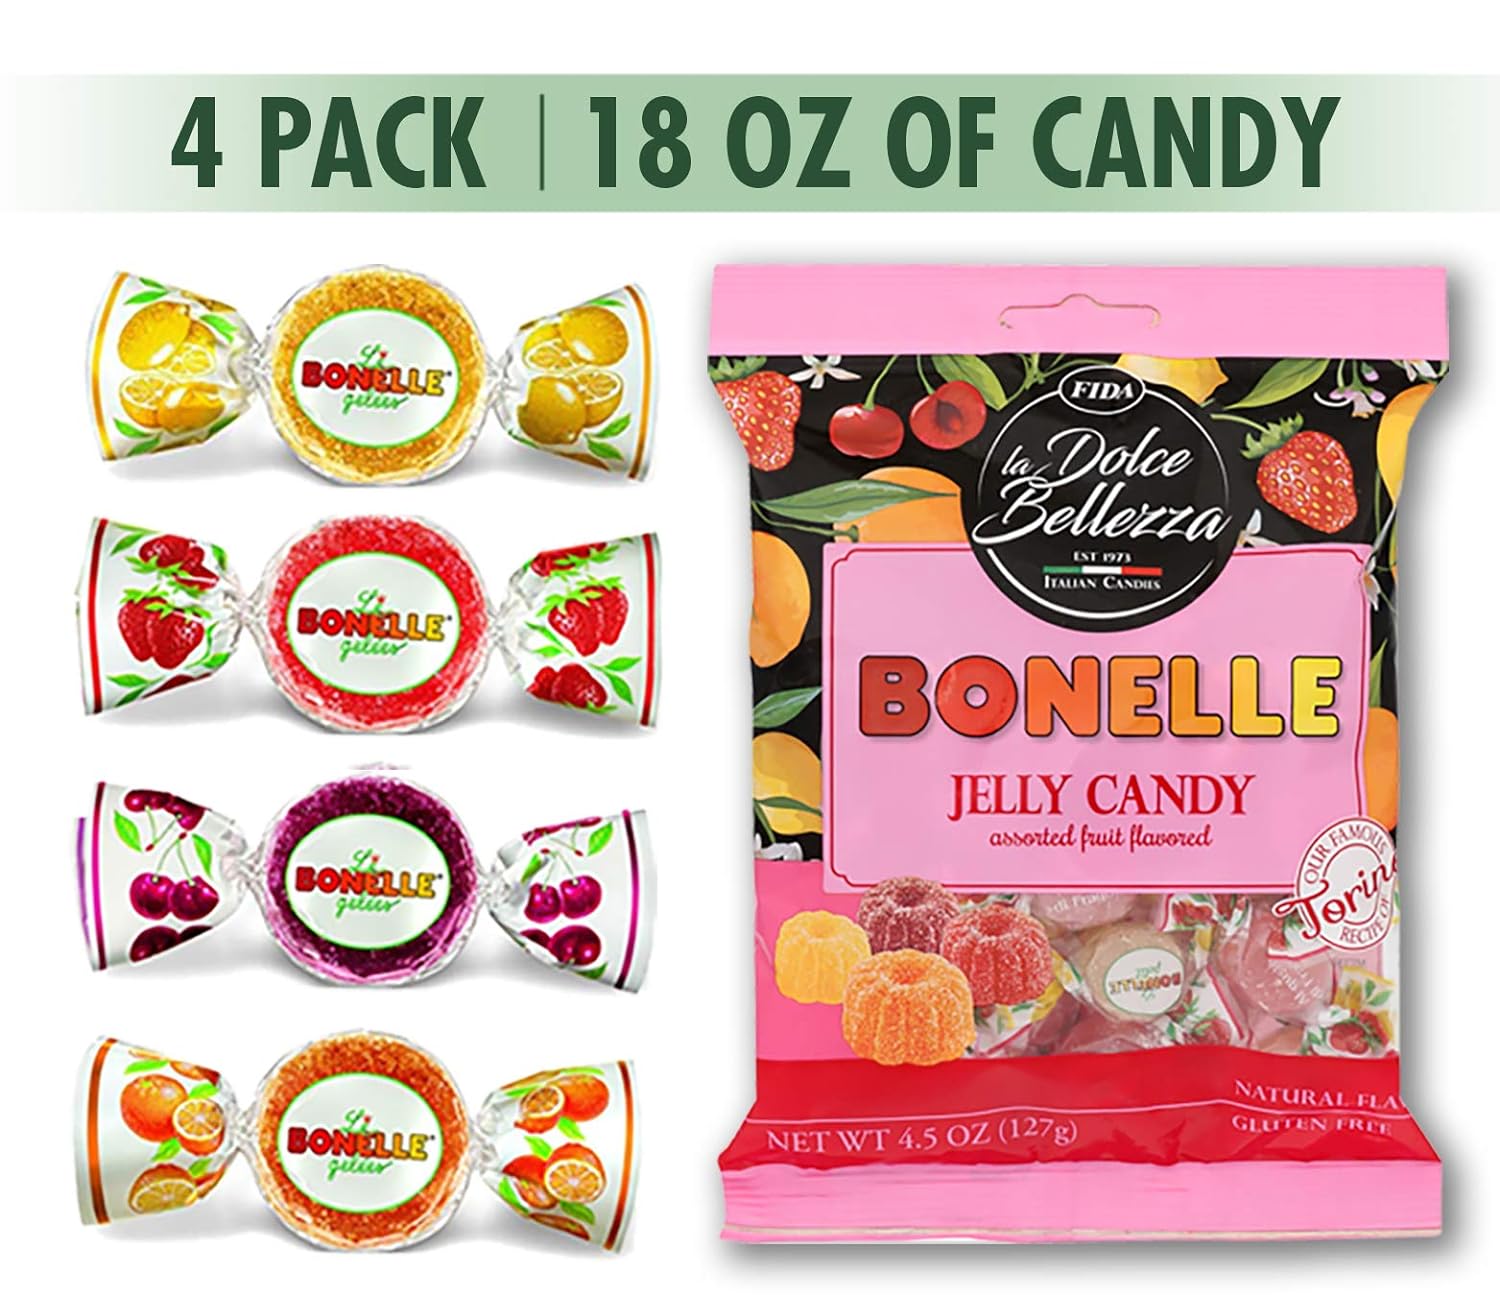 Fida - Bonelle Assorted Jelly Candy - Fruit Flavored - 4.5 oz, 18 oz Bag